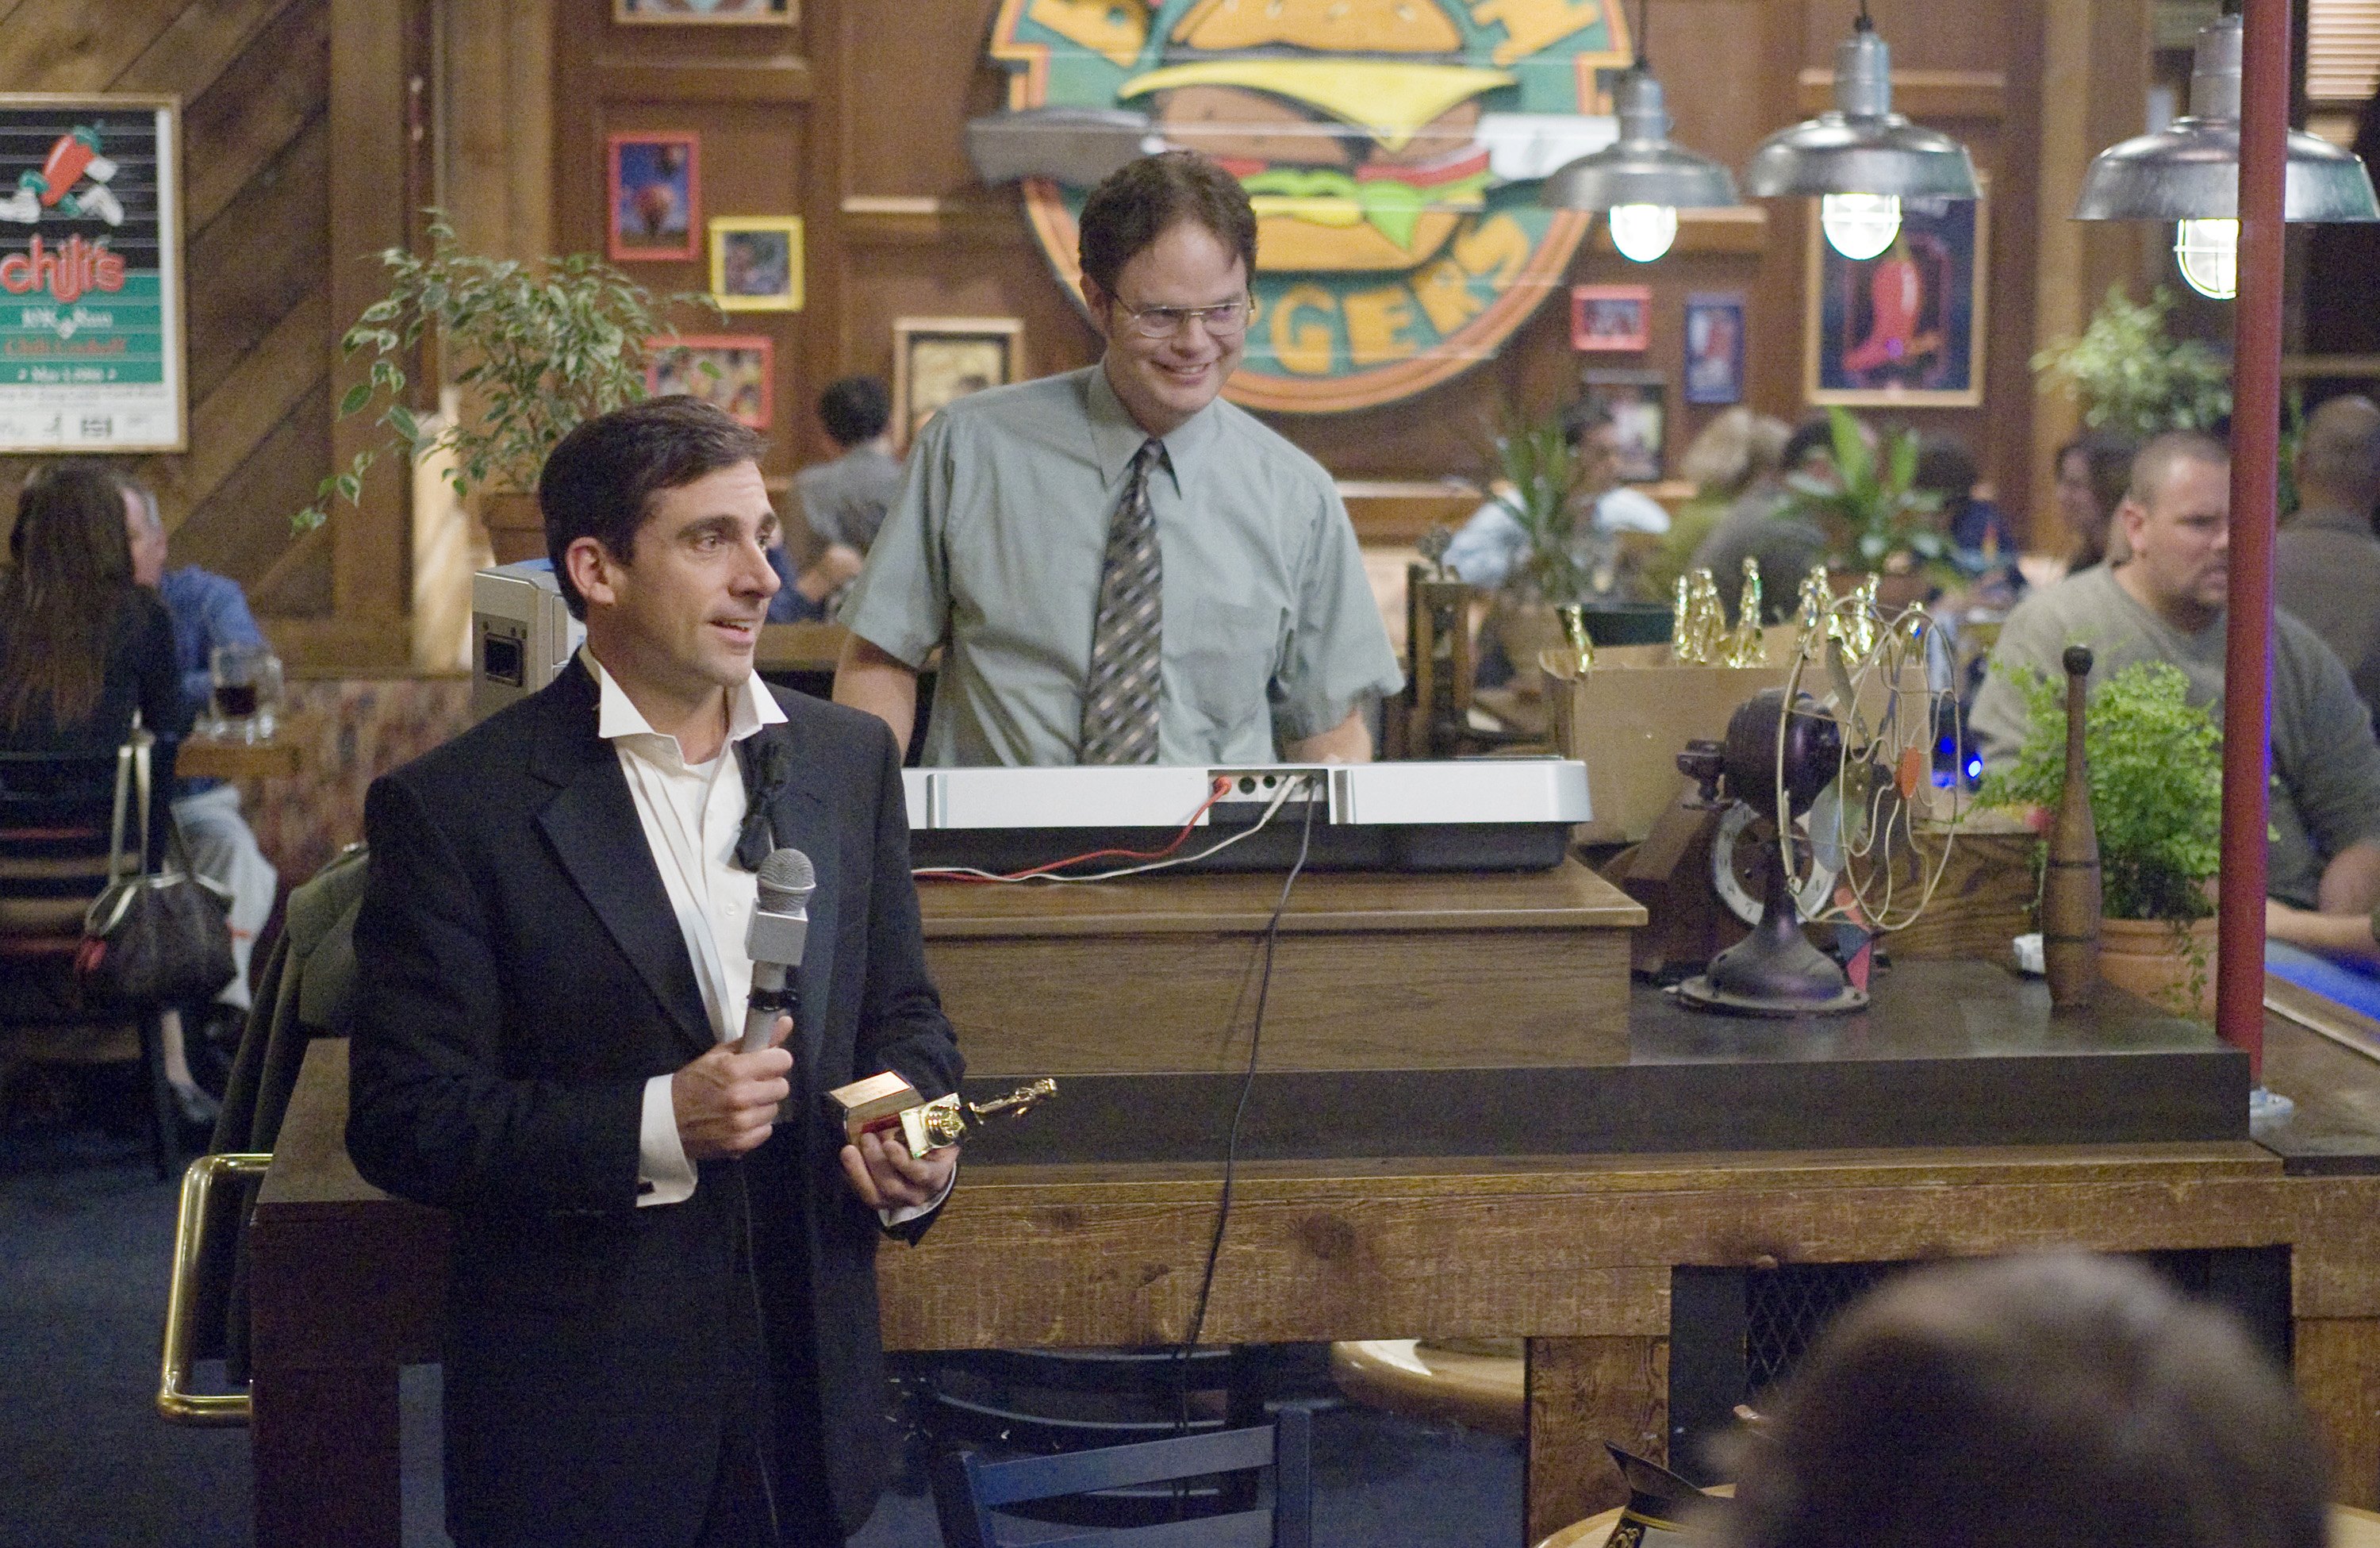 Steve Carell as Michael Scott and Rainn Wilson as Dwight Schrute in 'The Dundies' episode of 'The Office'